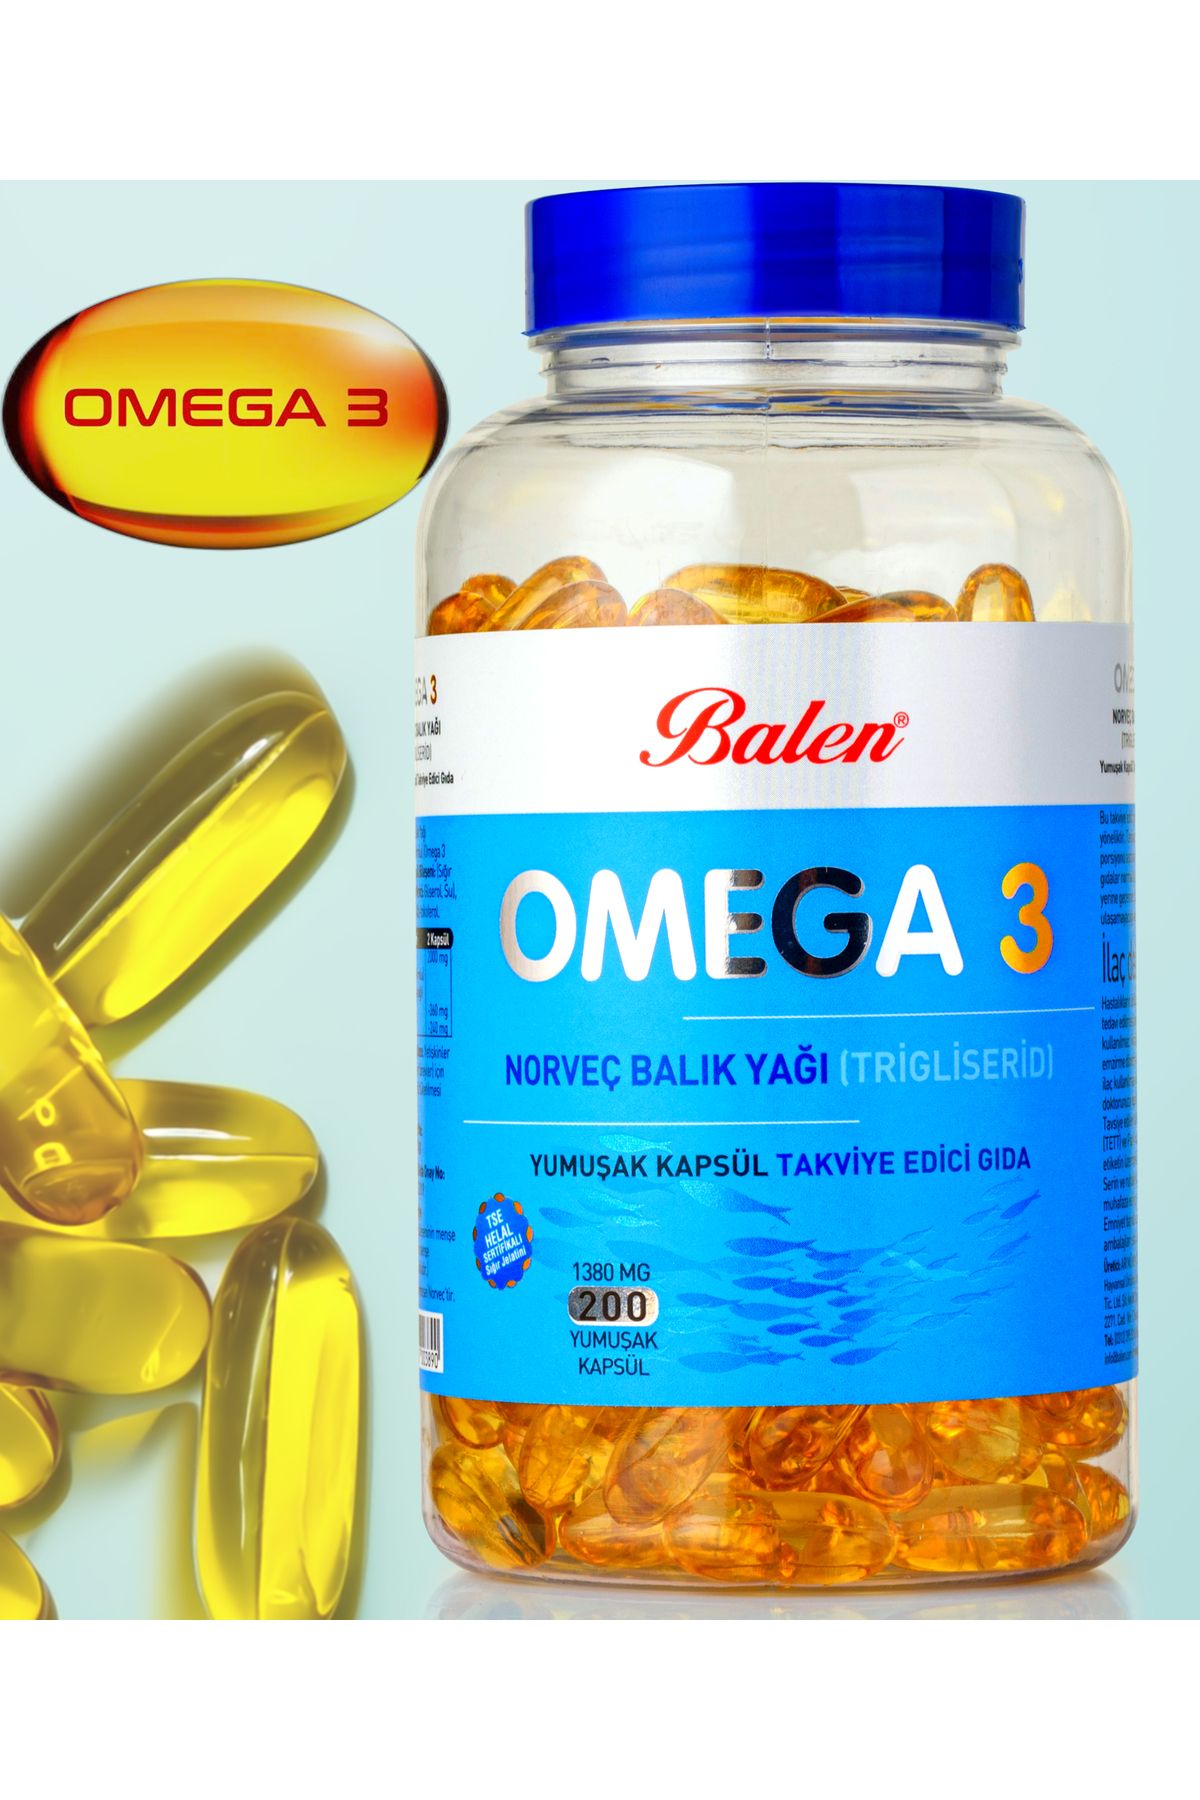 Balen Omega 3 Norveç Balık Yağı (trigiliserid) Yumuşak Kapsül 200 adet 1380 mg